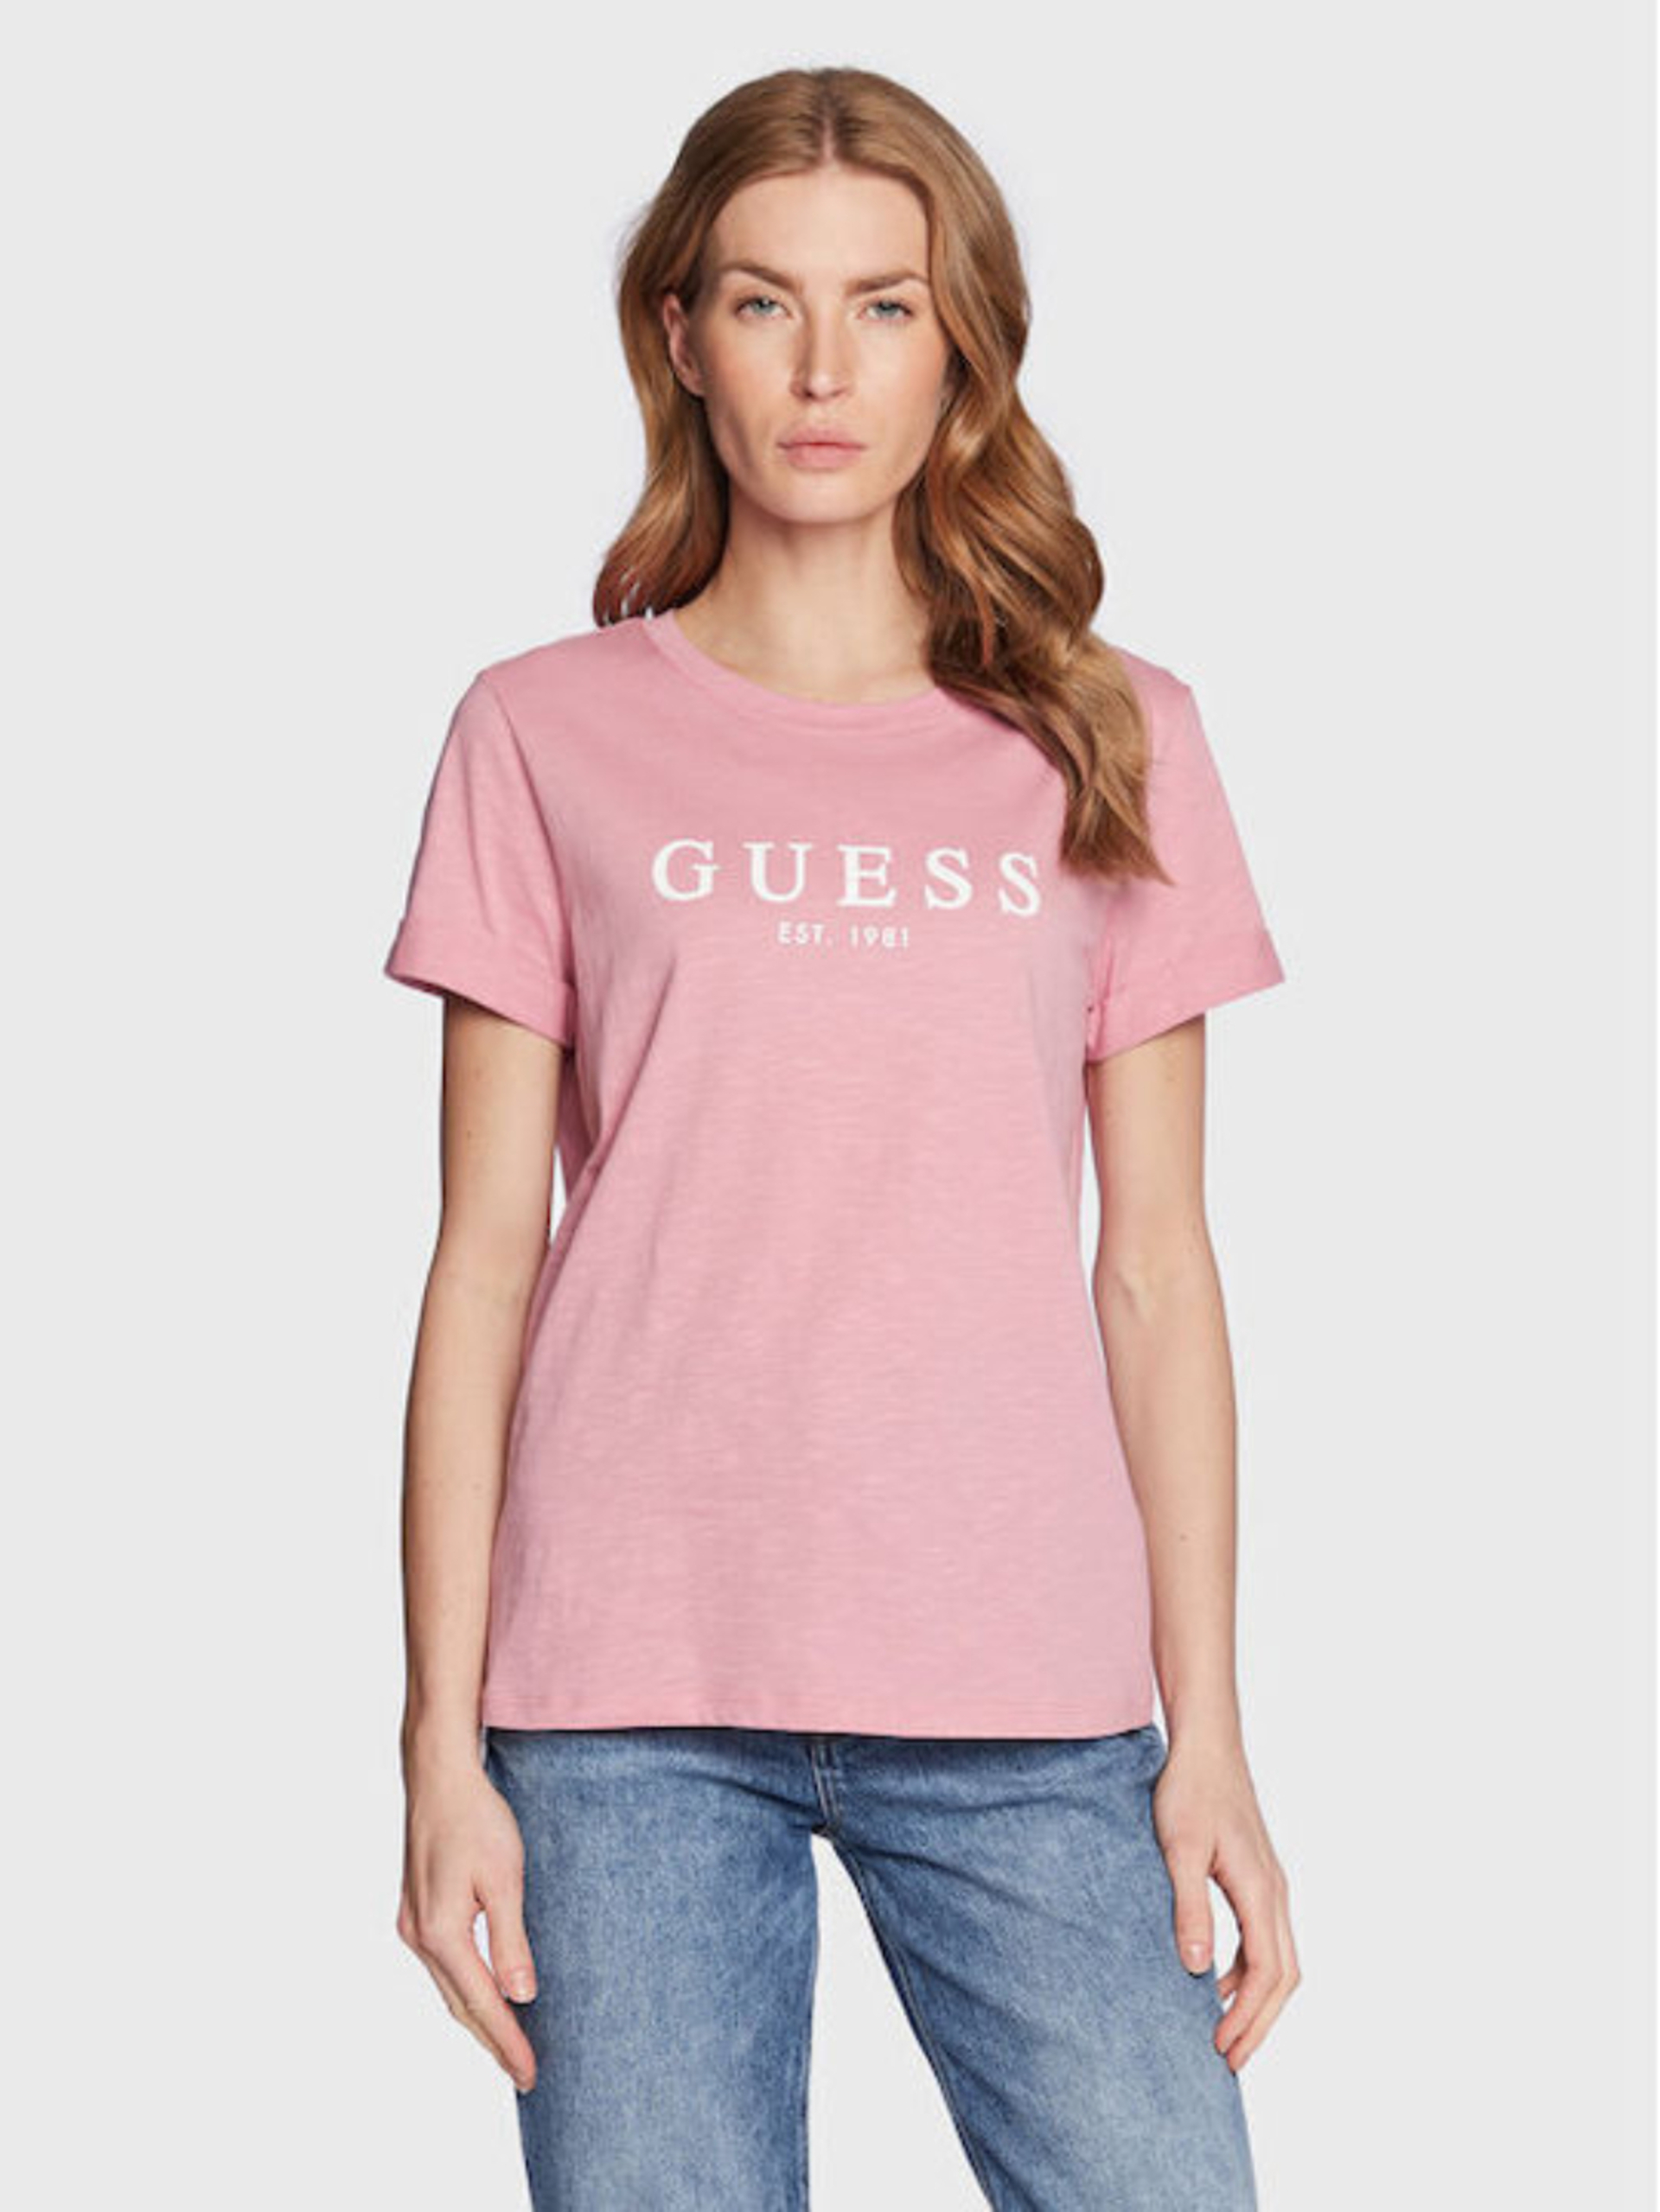 Guess dámské růžové tričko - M (G67G)